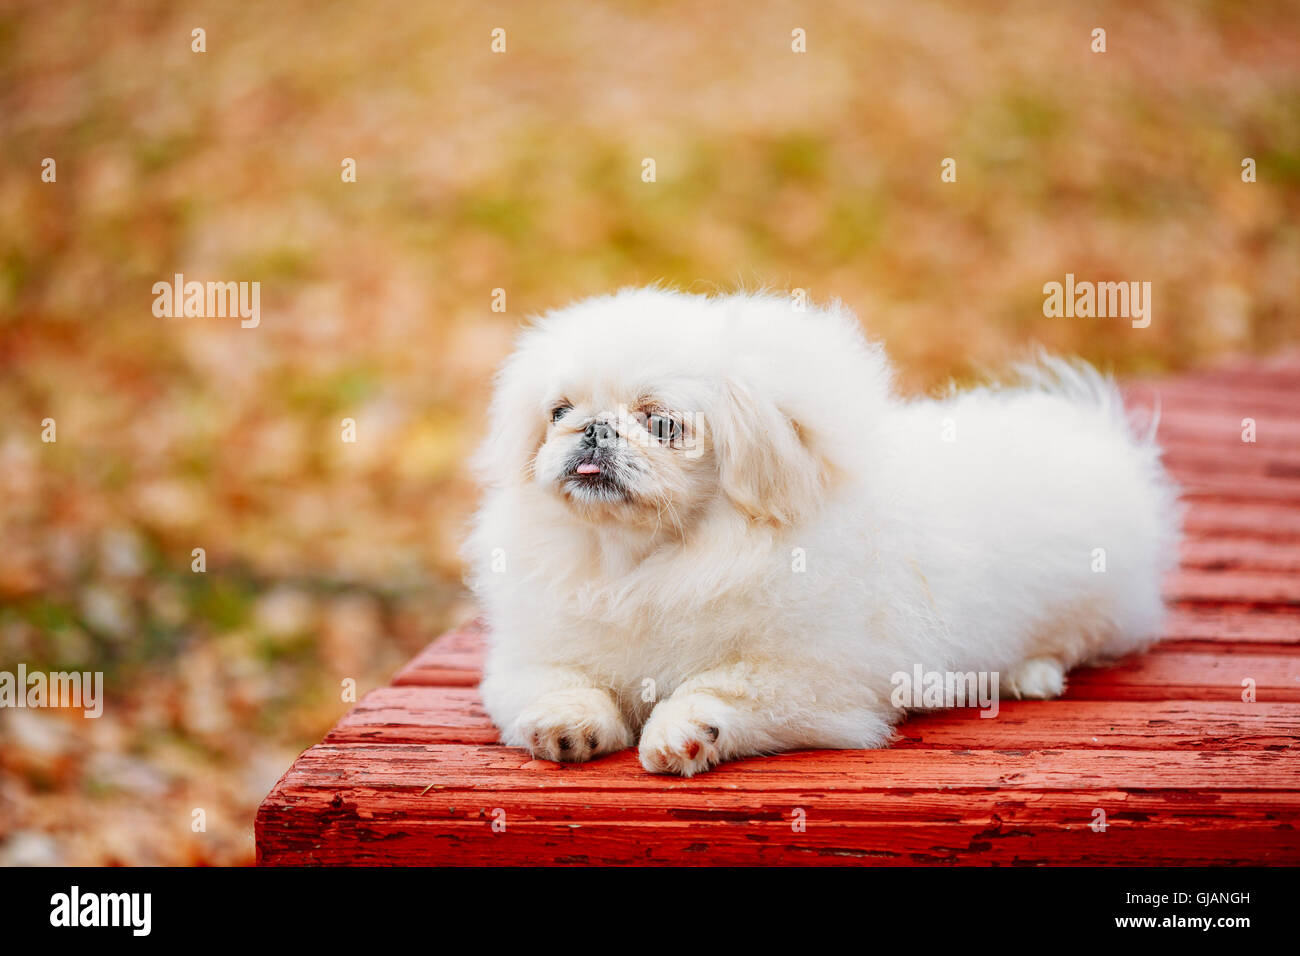 White Pekingese Pekinese Peke Whelp Puppy Dog Sitting On Wooden Bench In Autumn Park Stock Photo